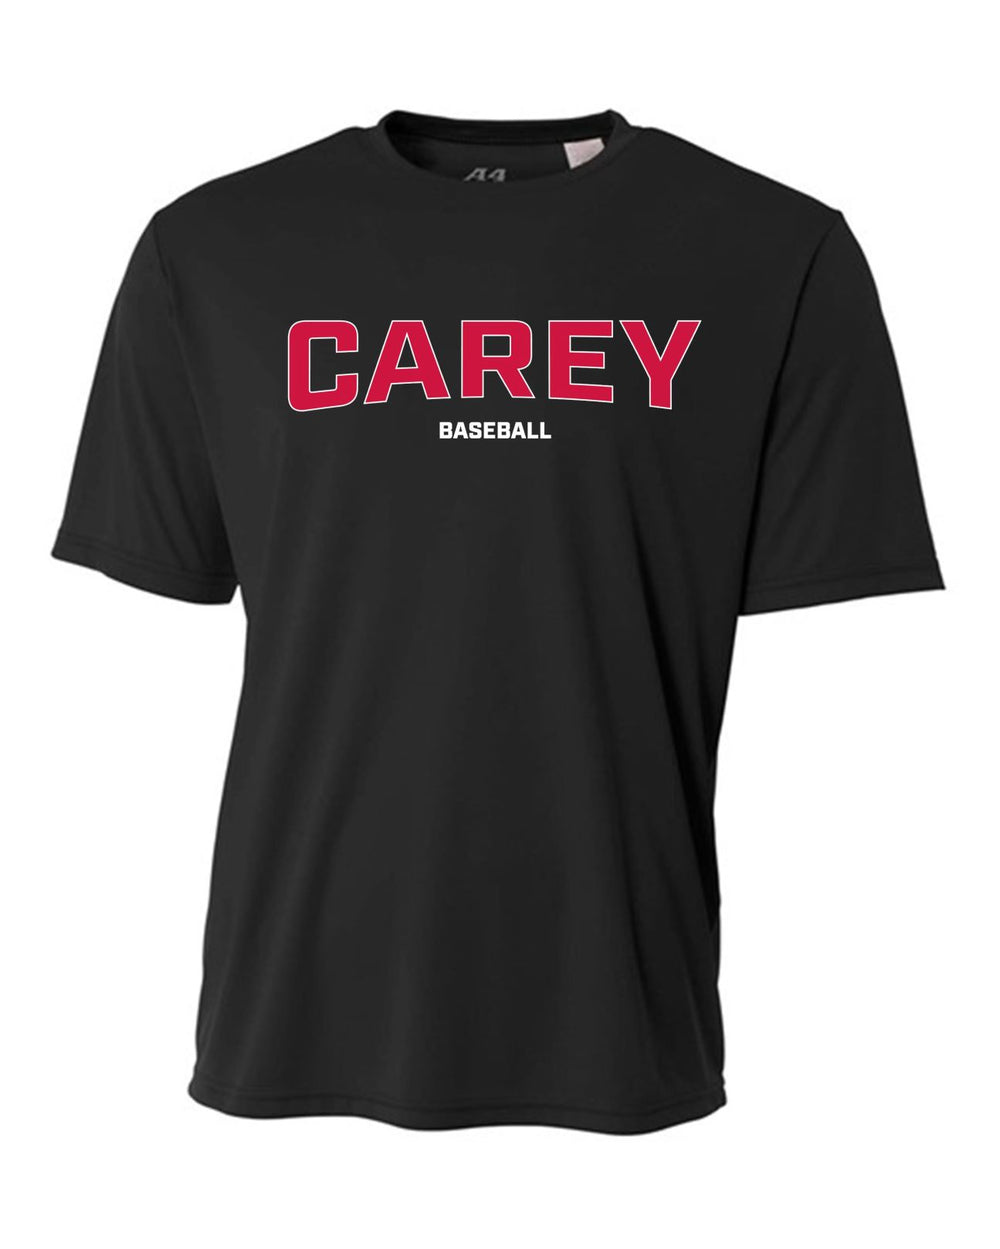 WCU Baseball Youth Short-Sleeve Performance Shirt WCU Baseball Black CAREY - Third Coast Soccer